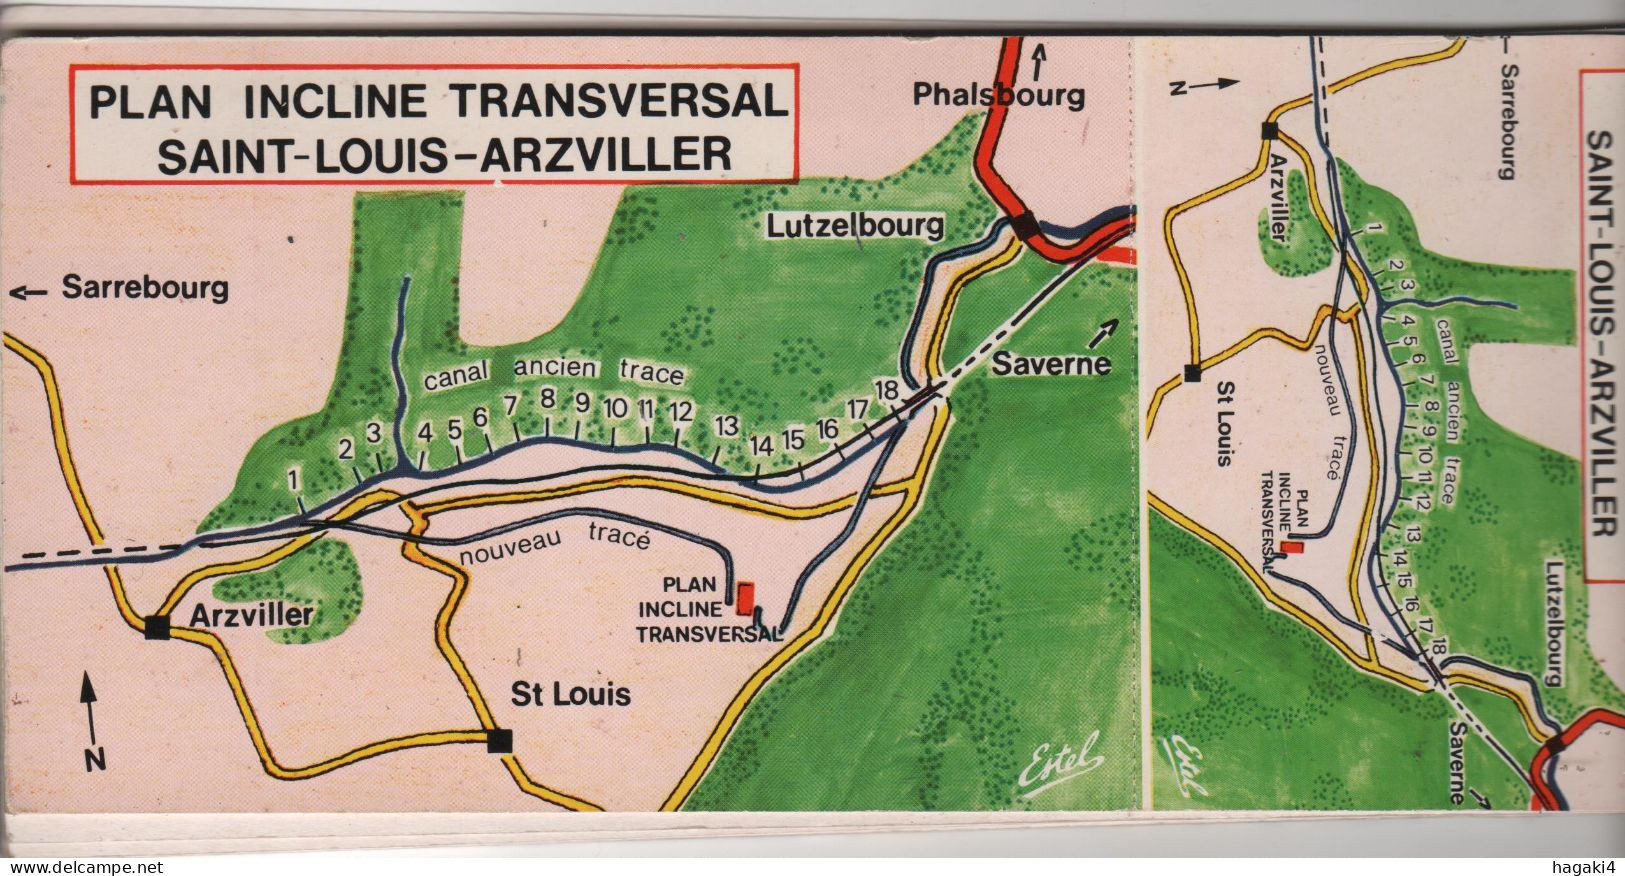 CPM 57 : PLAN INCLINE TRANSVERSAL SAINT-LOUIS-ARZVILLER - Carnet De 9 CPM Incomplet - Années 1970 - Arzviller